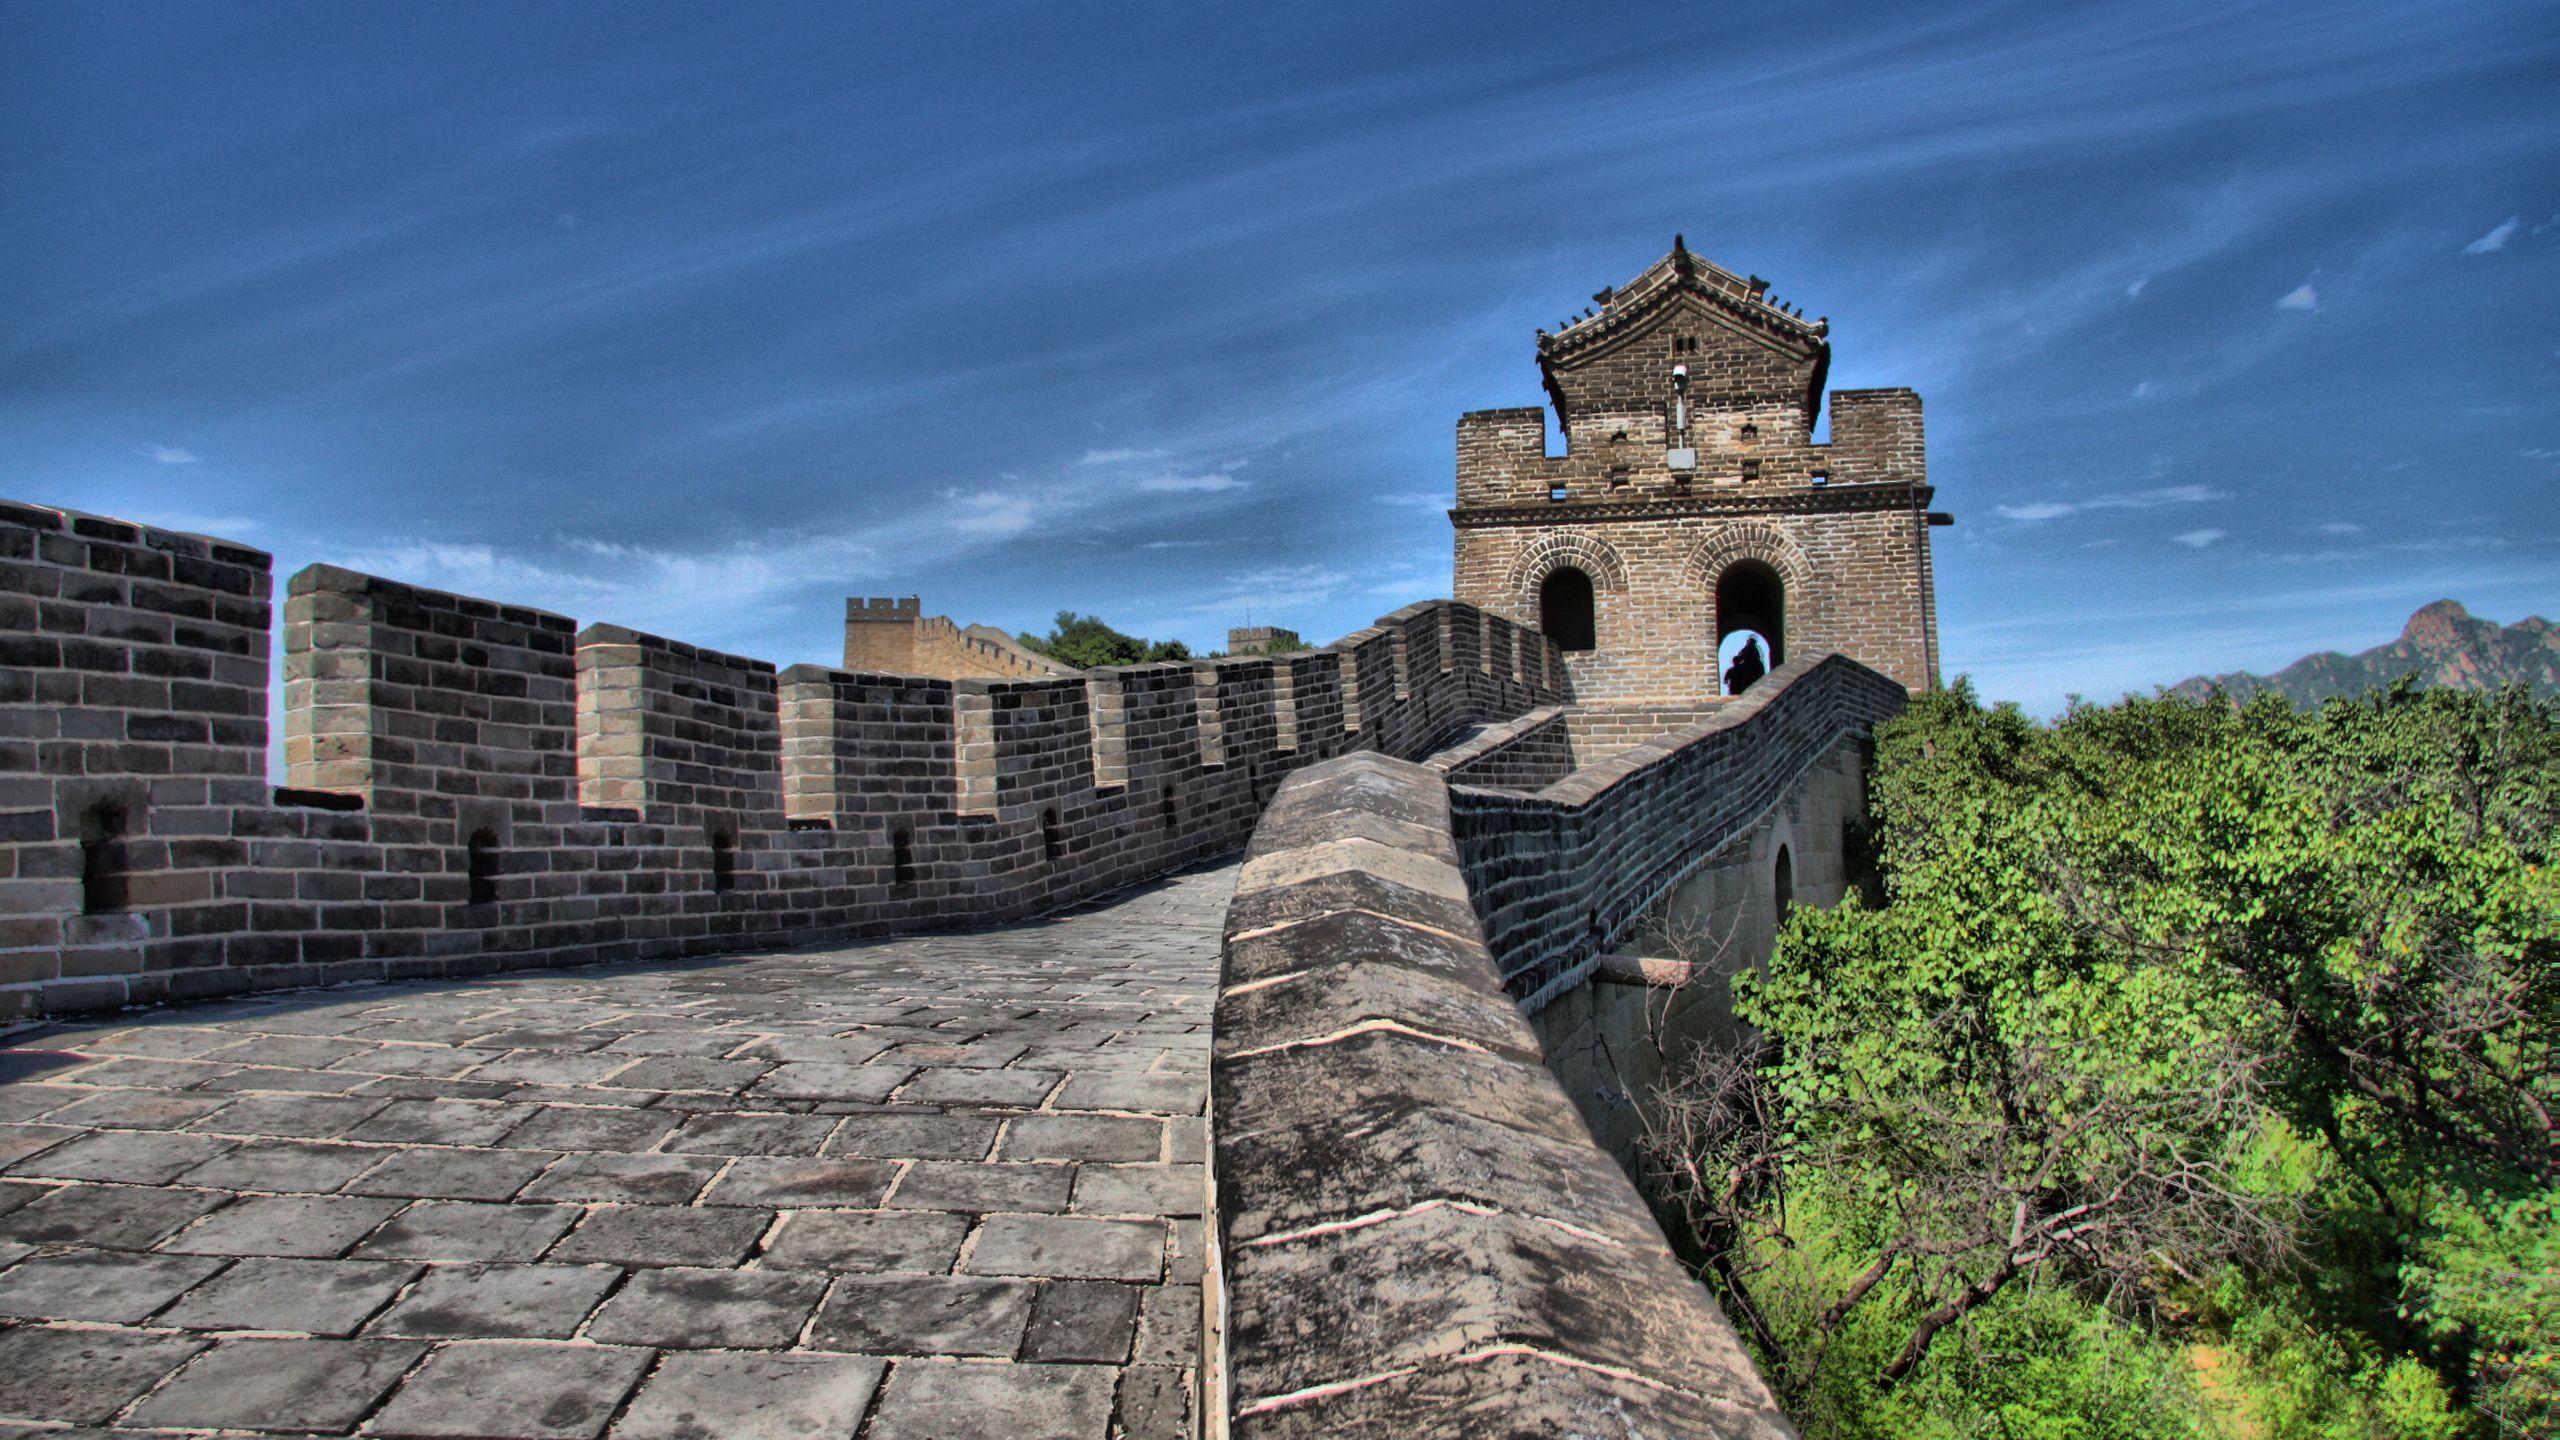 Great Wall of China HD Wallpapers